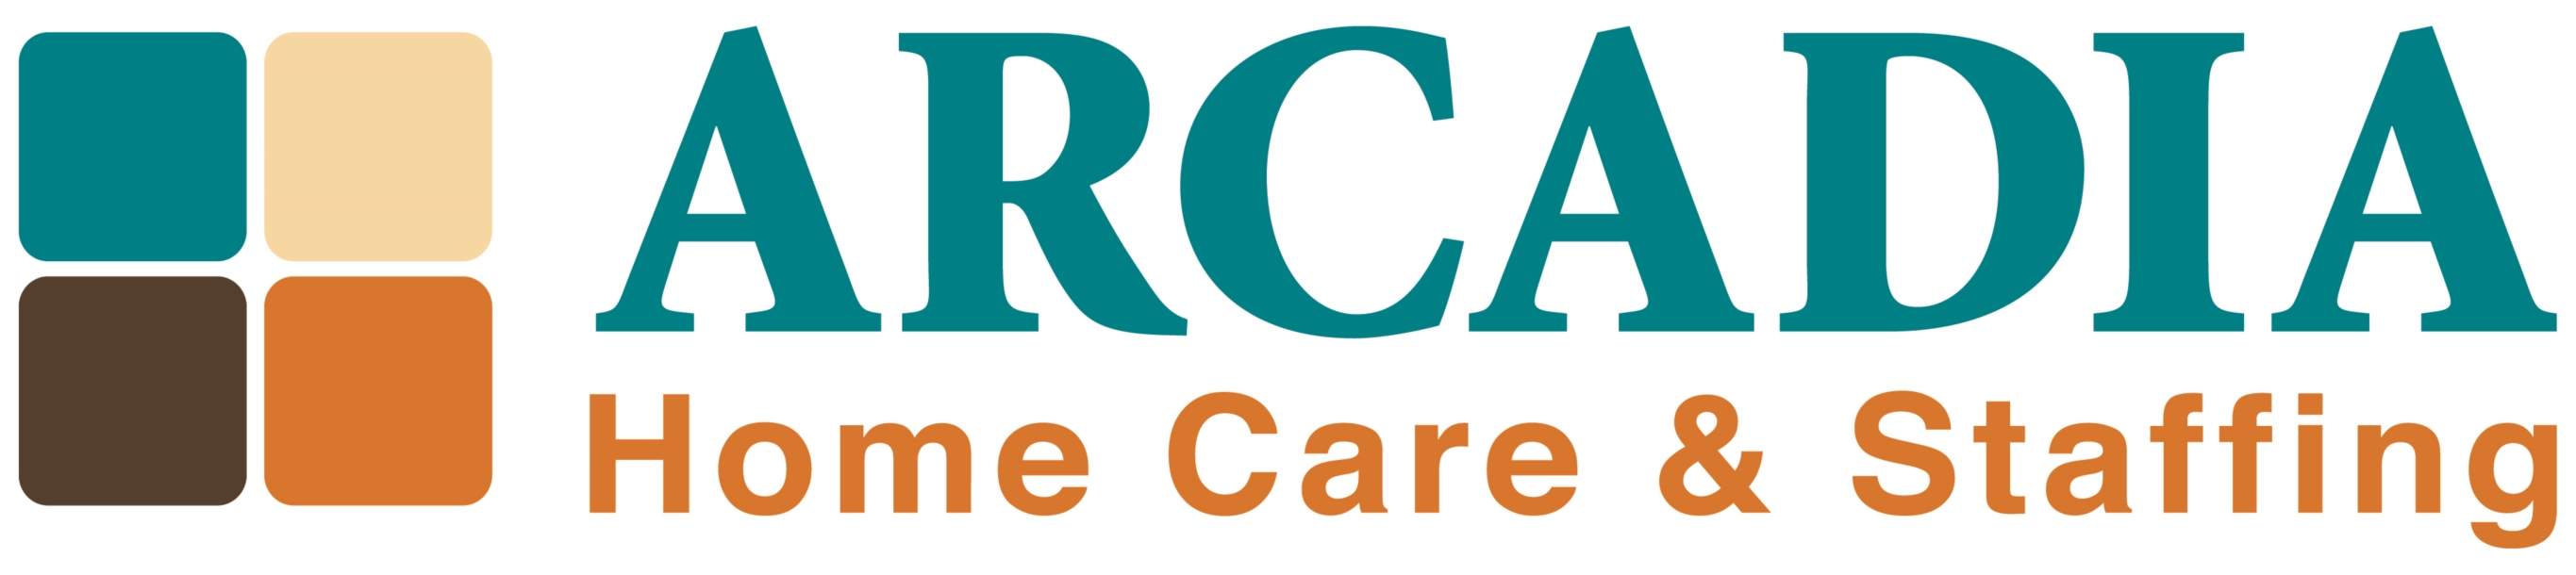 Arcadia Home Care & Staffing logo